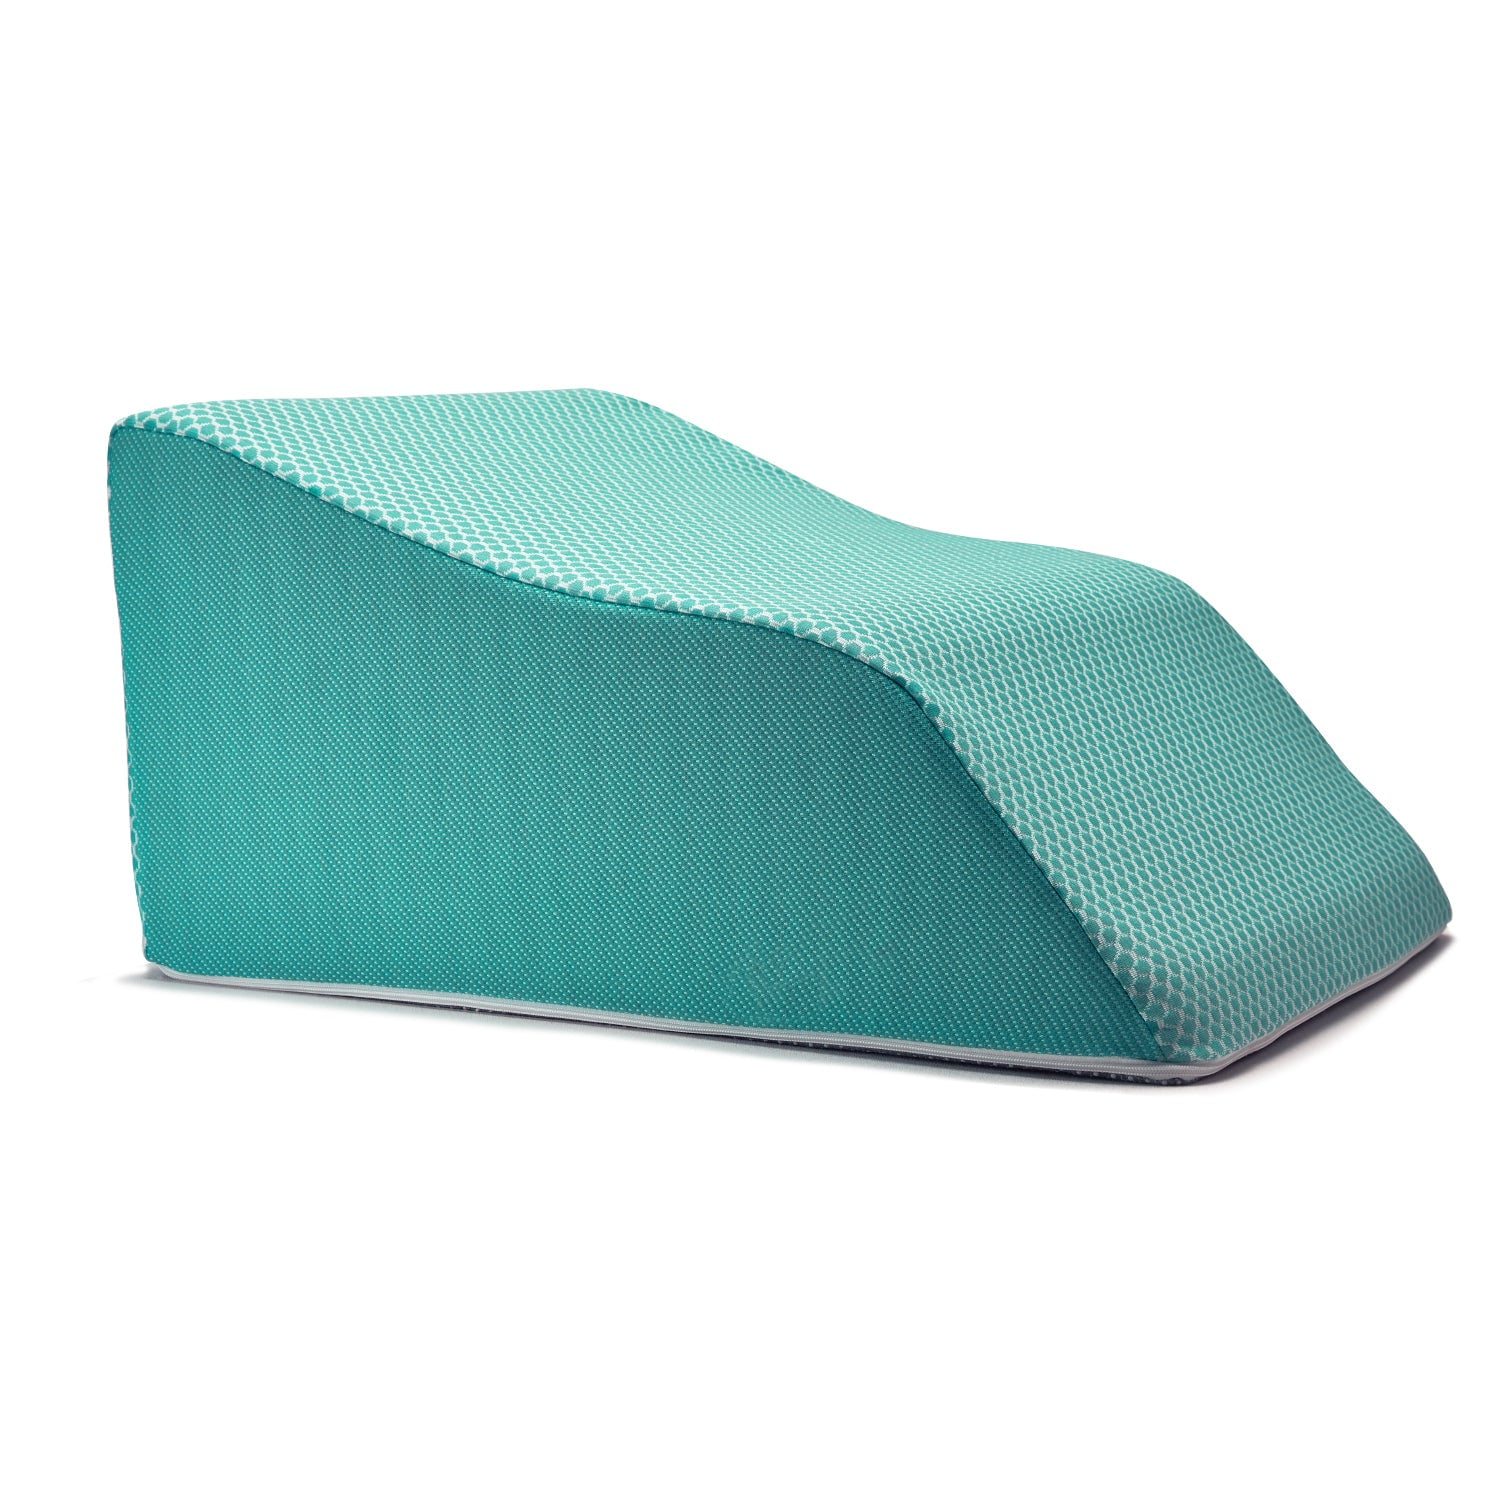 Zen Elevating Leg Rest Pillow Memory Foam Leg Rest Pillow - Reduces Back  Pain & Improves Circulation - Includes Removable Blend Cover 